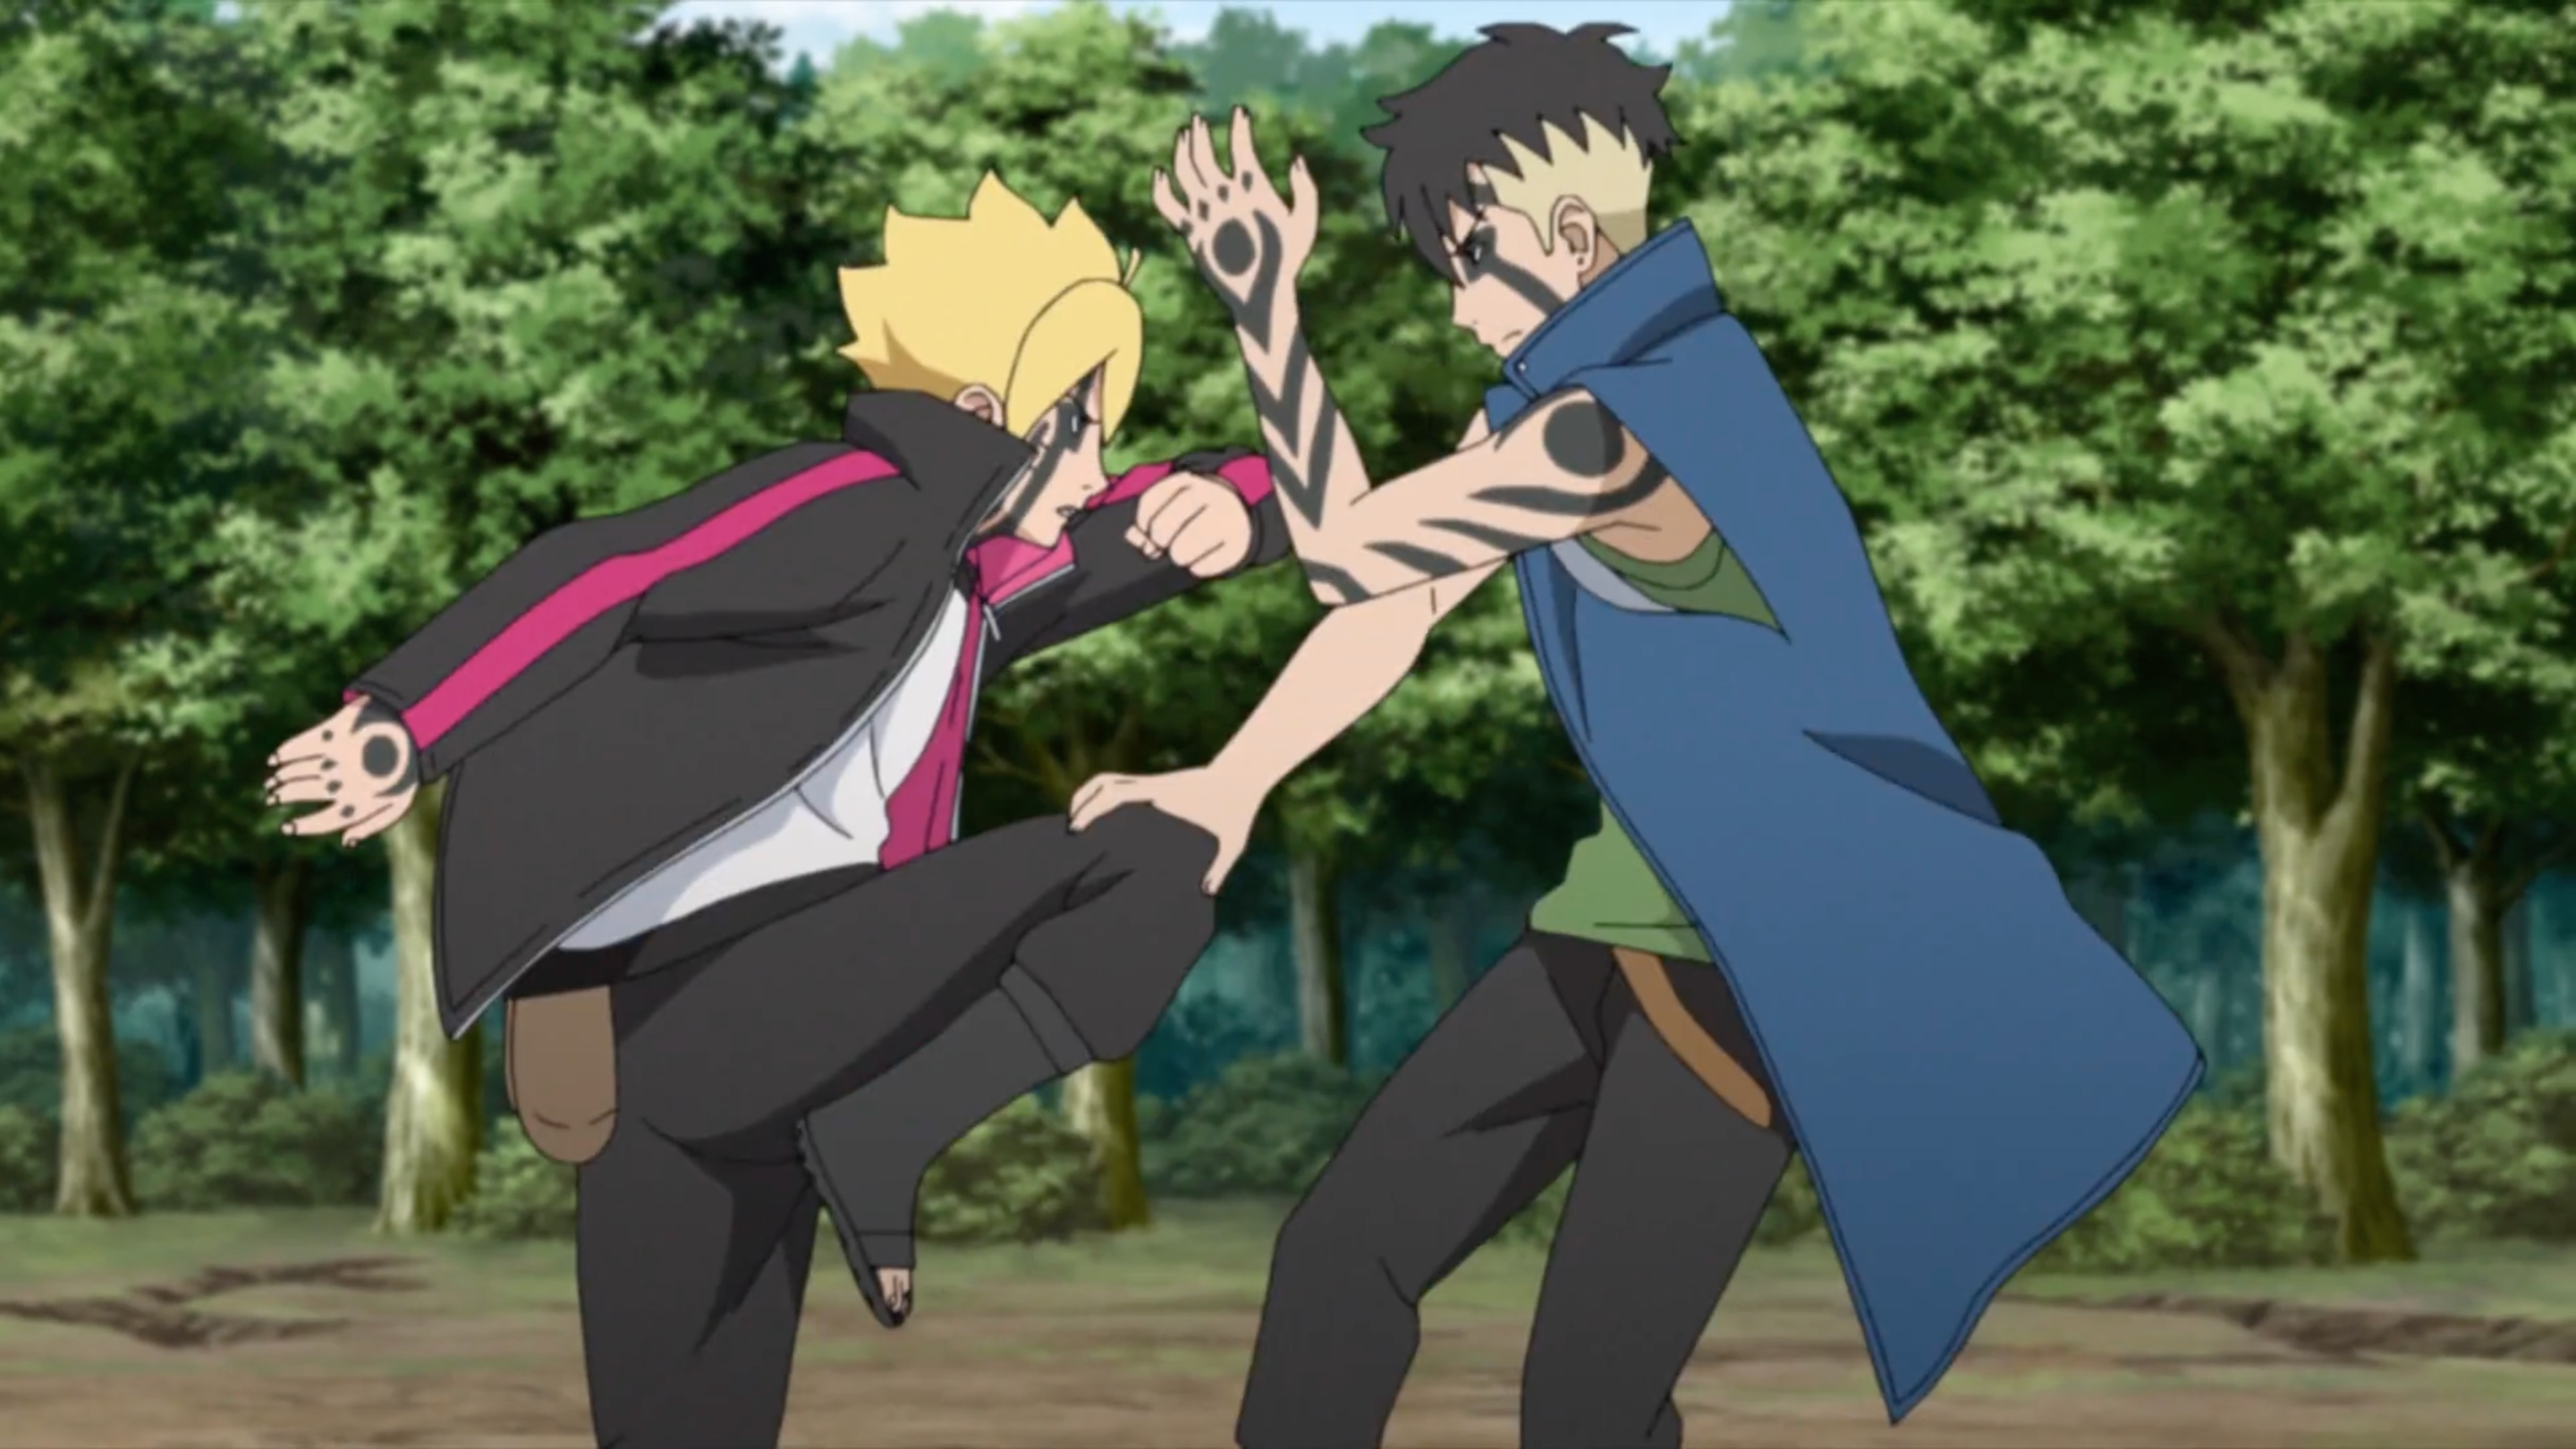 Boruto: This was the fun fight between Kawaki and Naruto's son